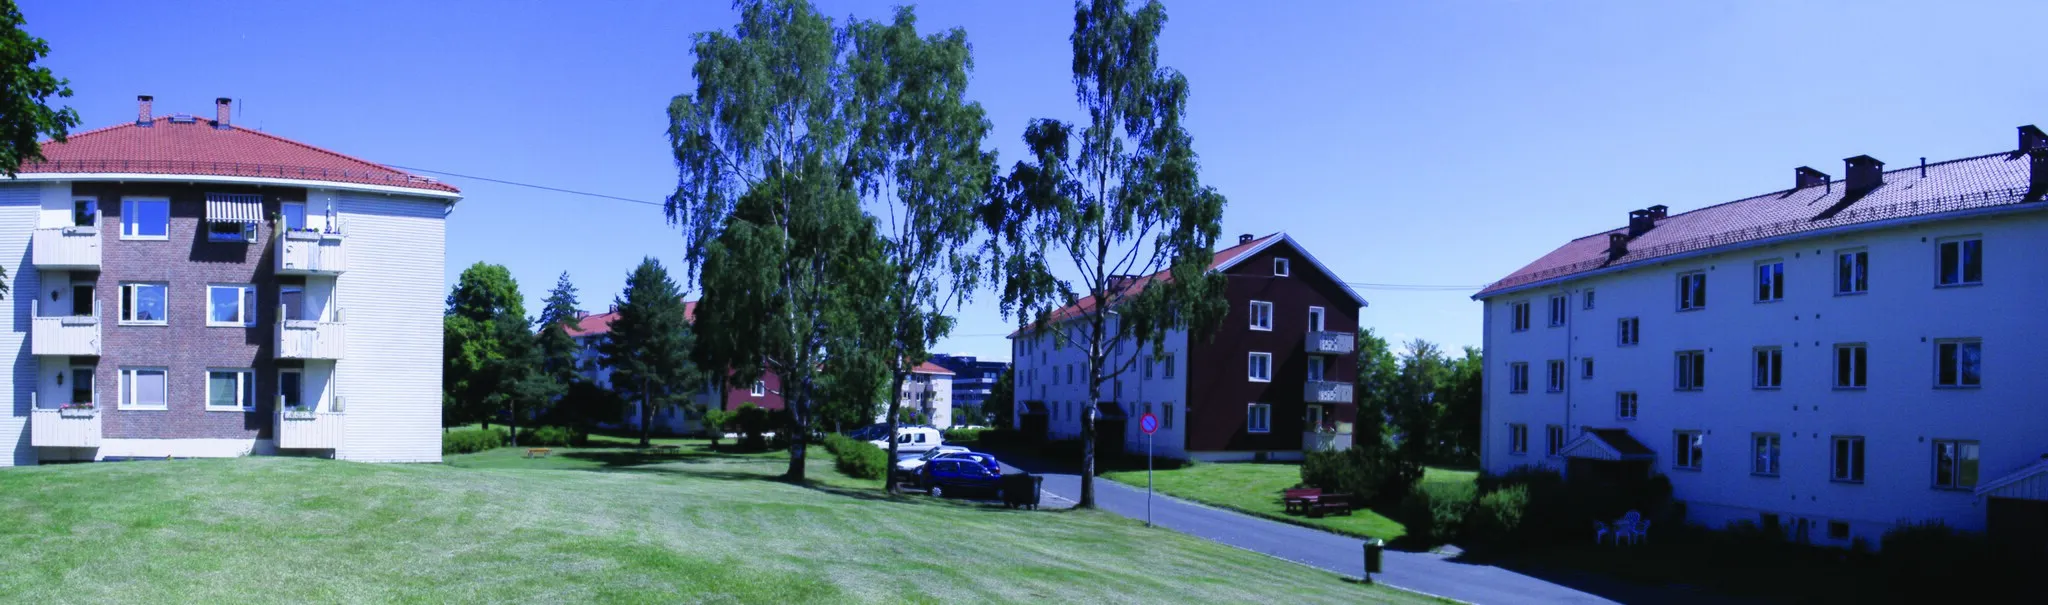 Photo showing: From Keyserløkka residential area in Oslo, Norway